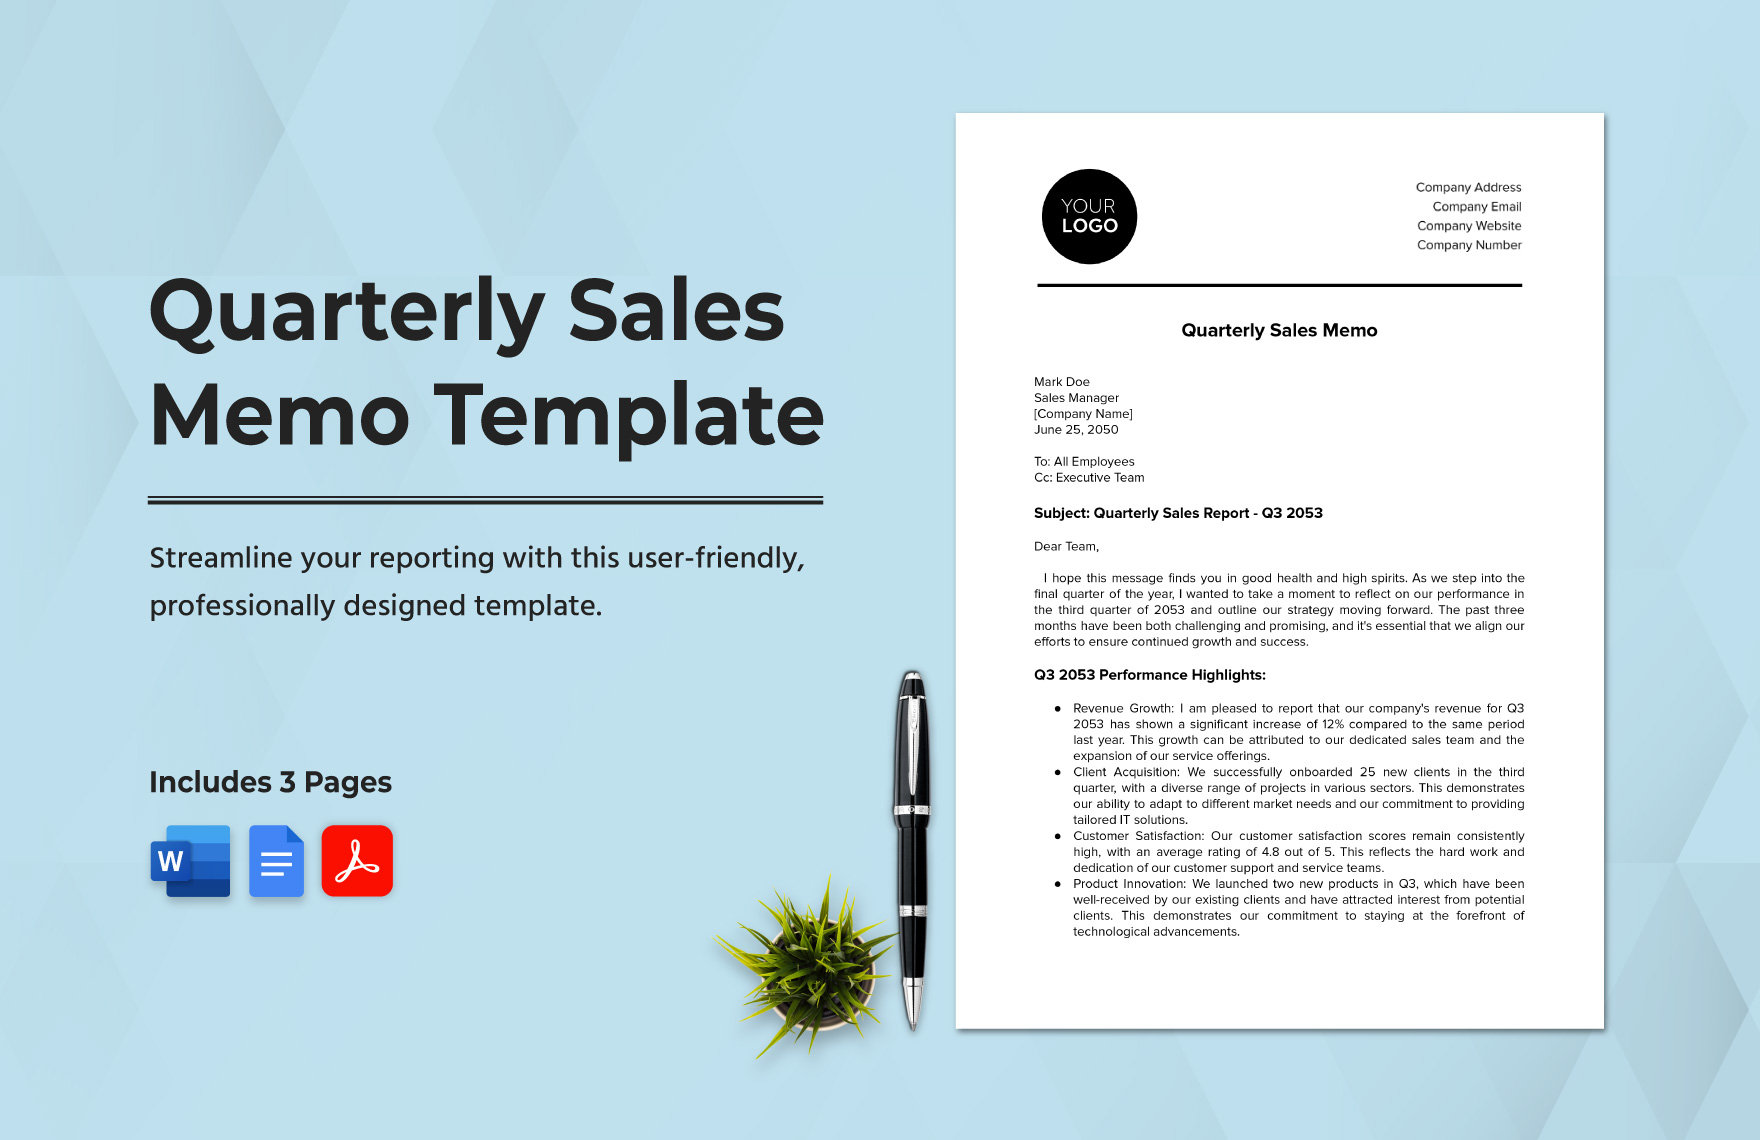 Quarterly Sales Memo Template in Word, Google Docs, PDF